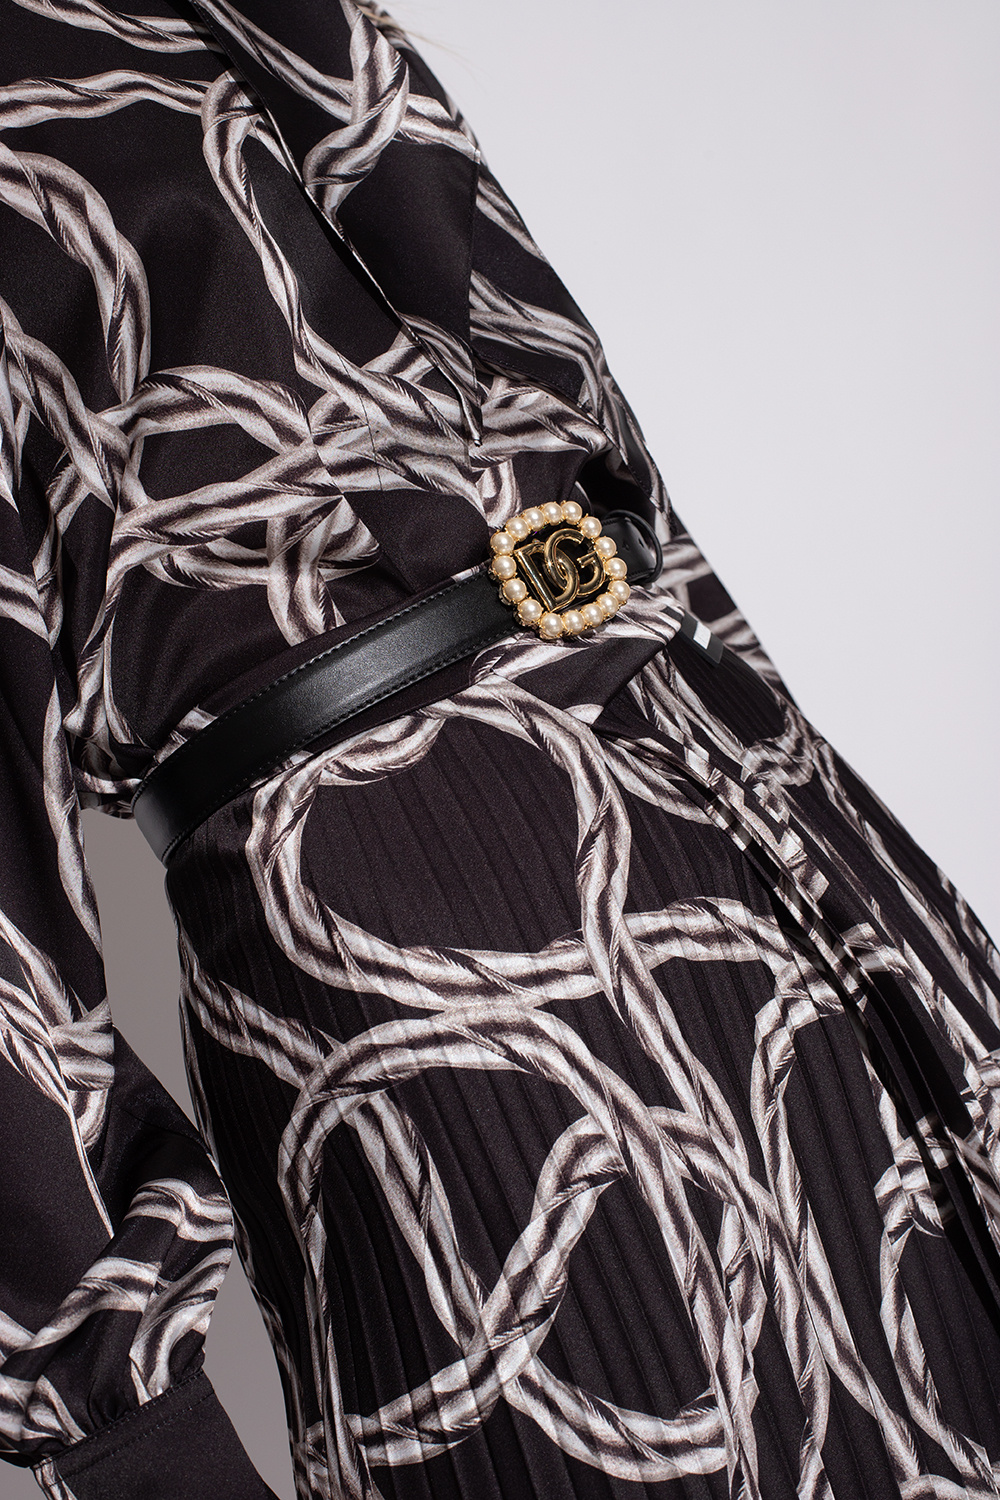 Cinturones dolce ANIMAL & Gabbana Belt with logo